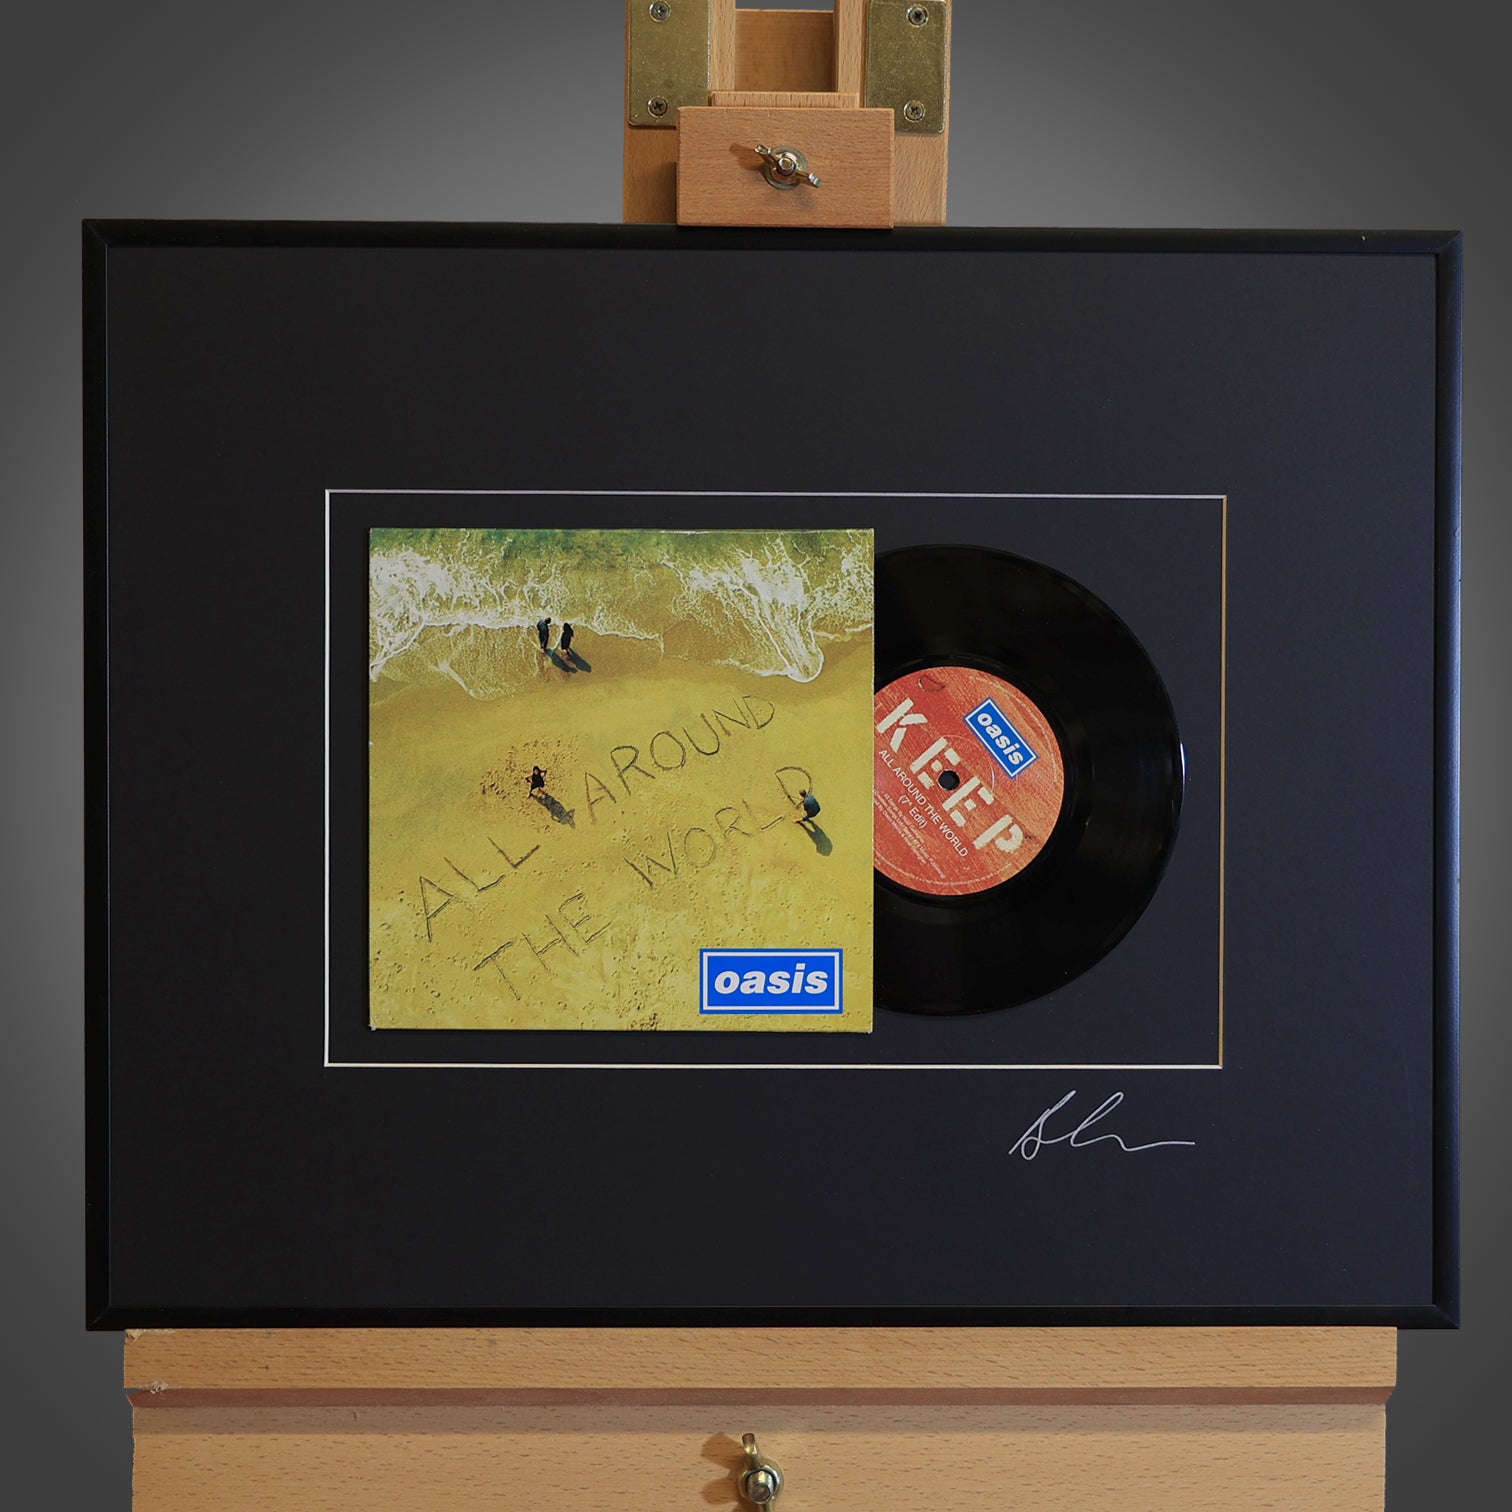 Oasis - All Around The World - Framed 7 inch Vinyl - New Item